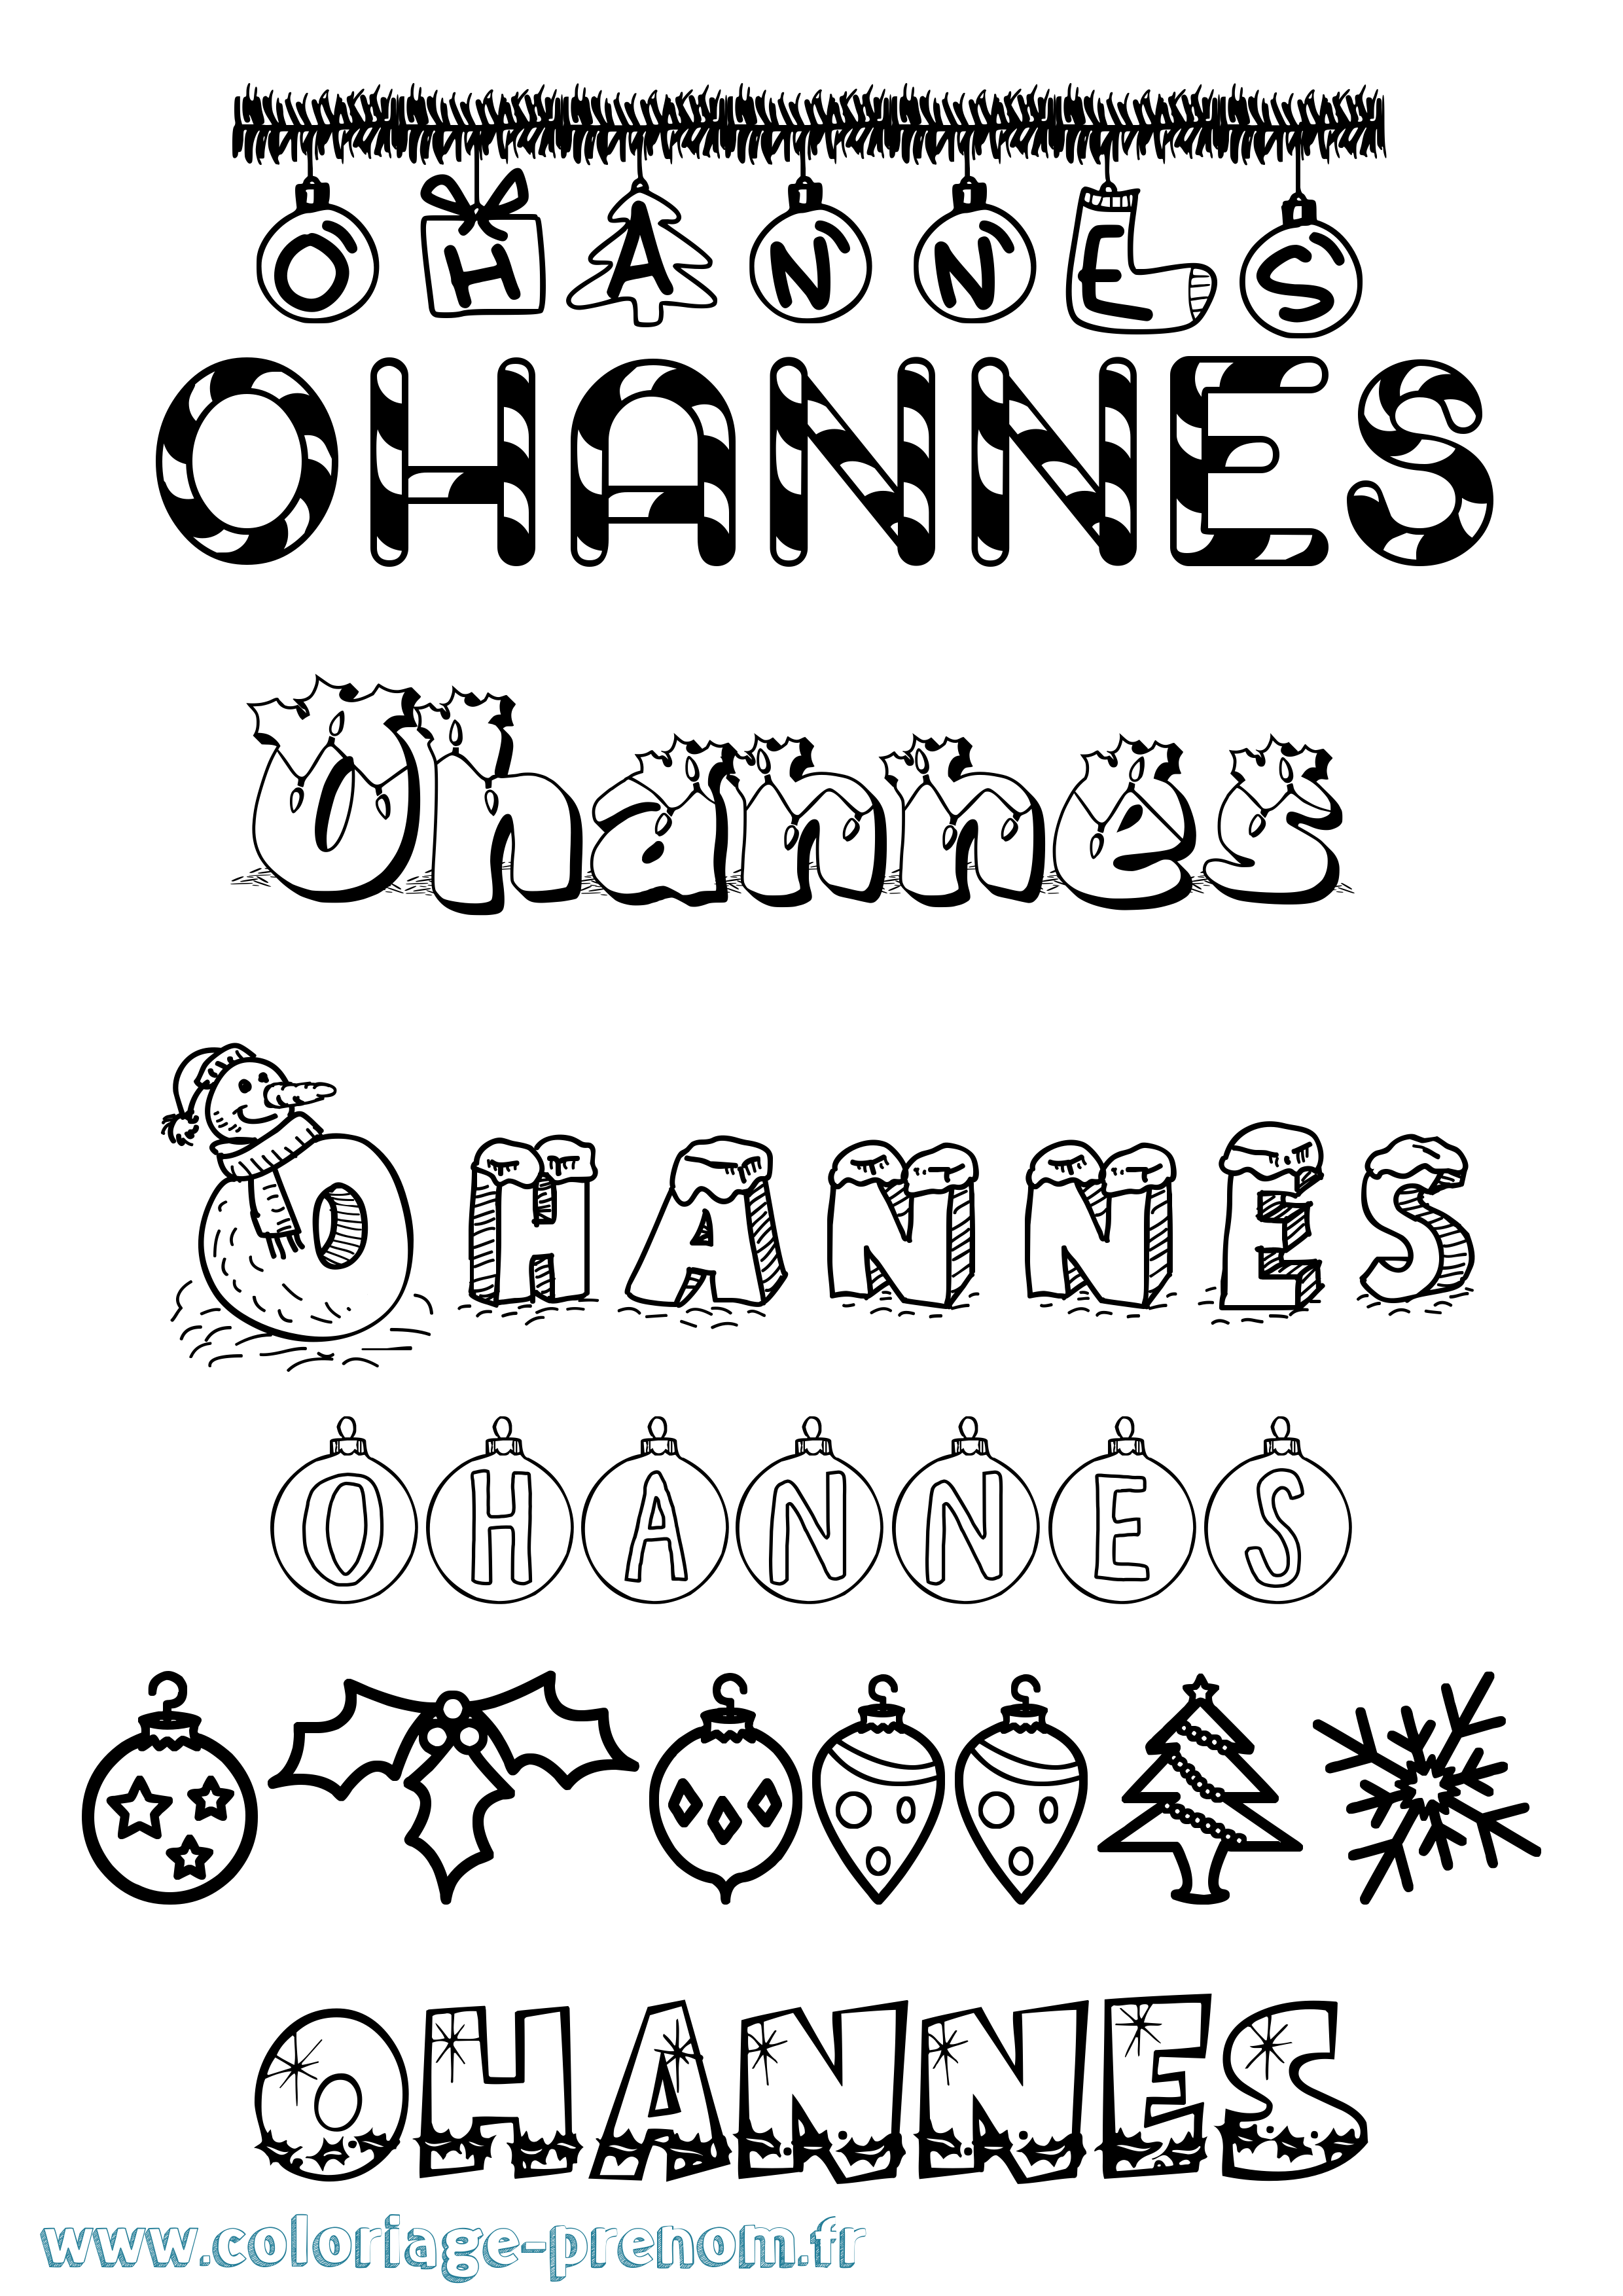 Coloriage prénom Ohannes Noël